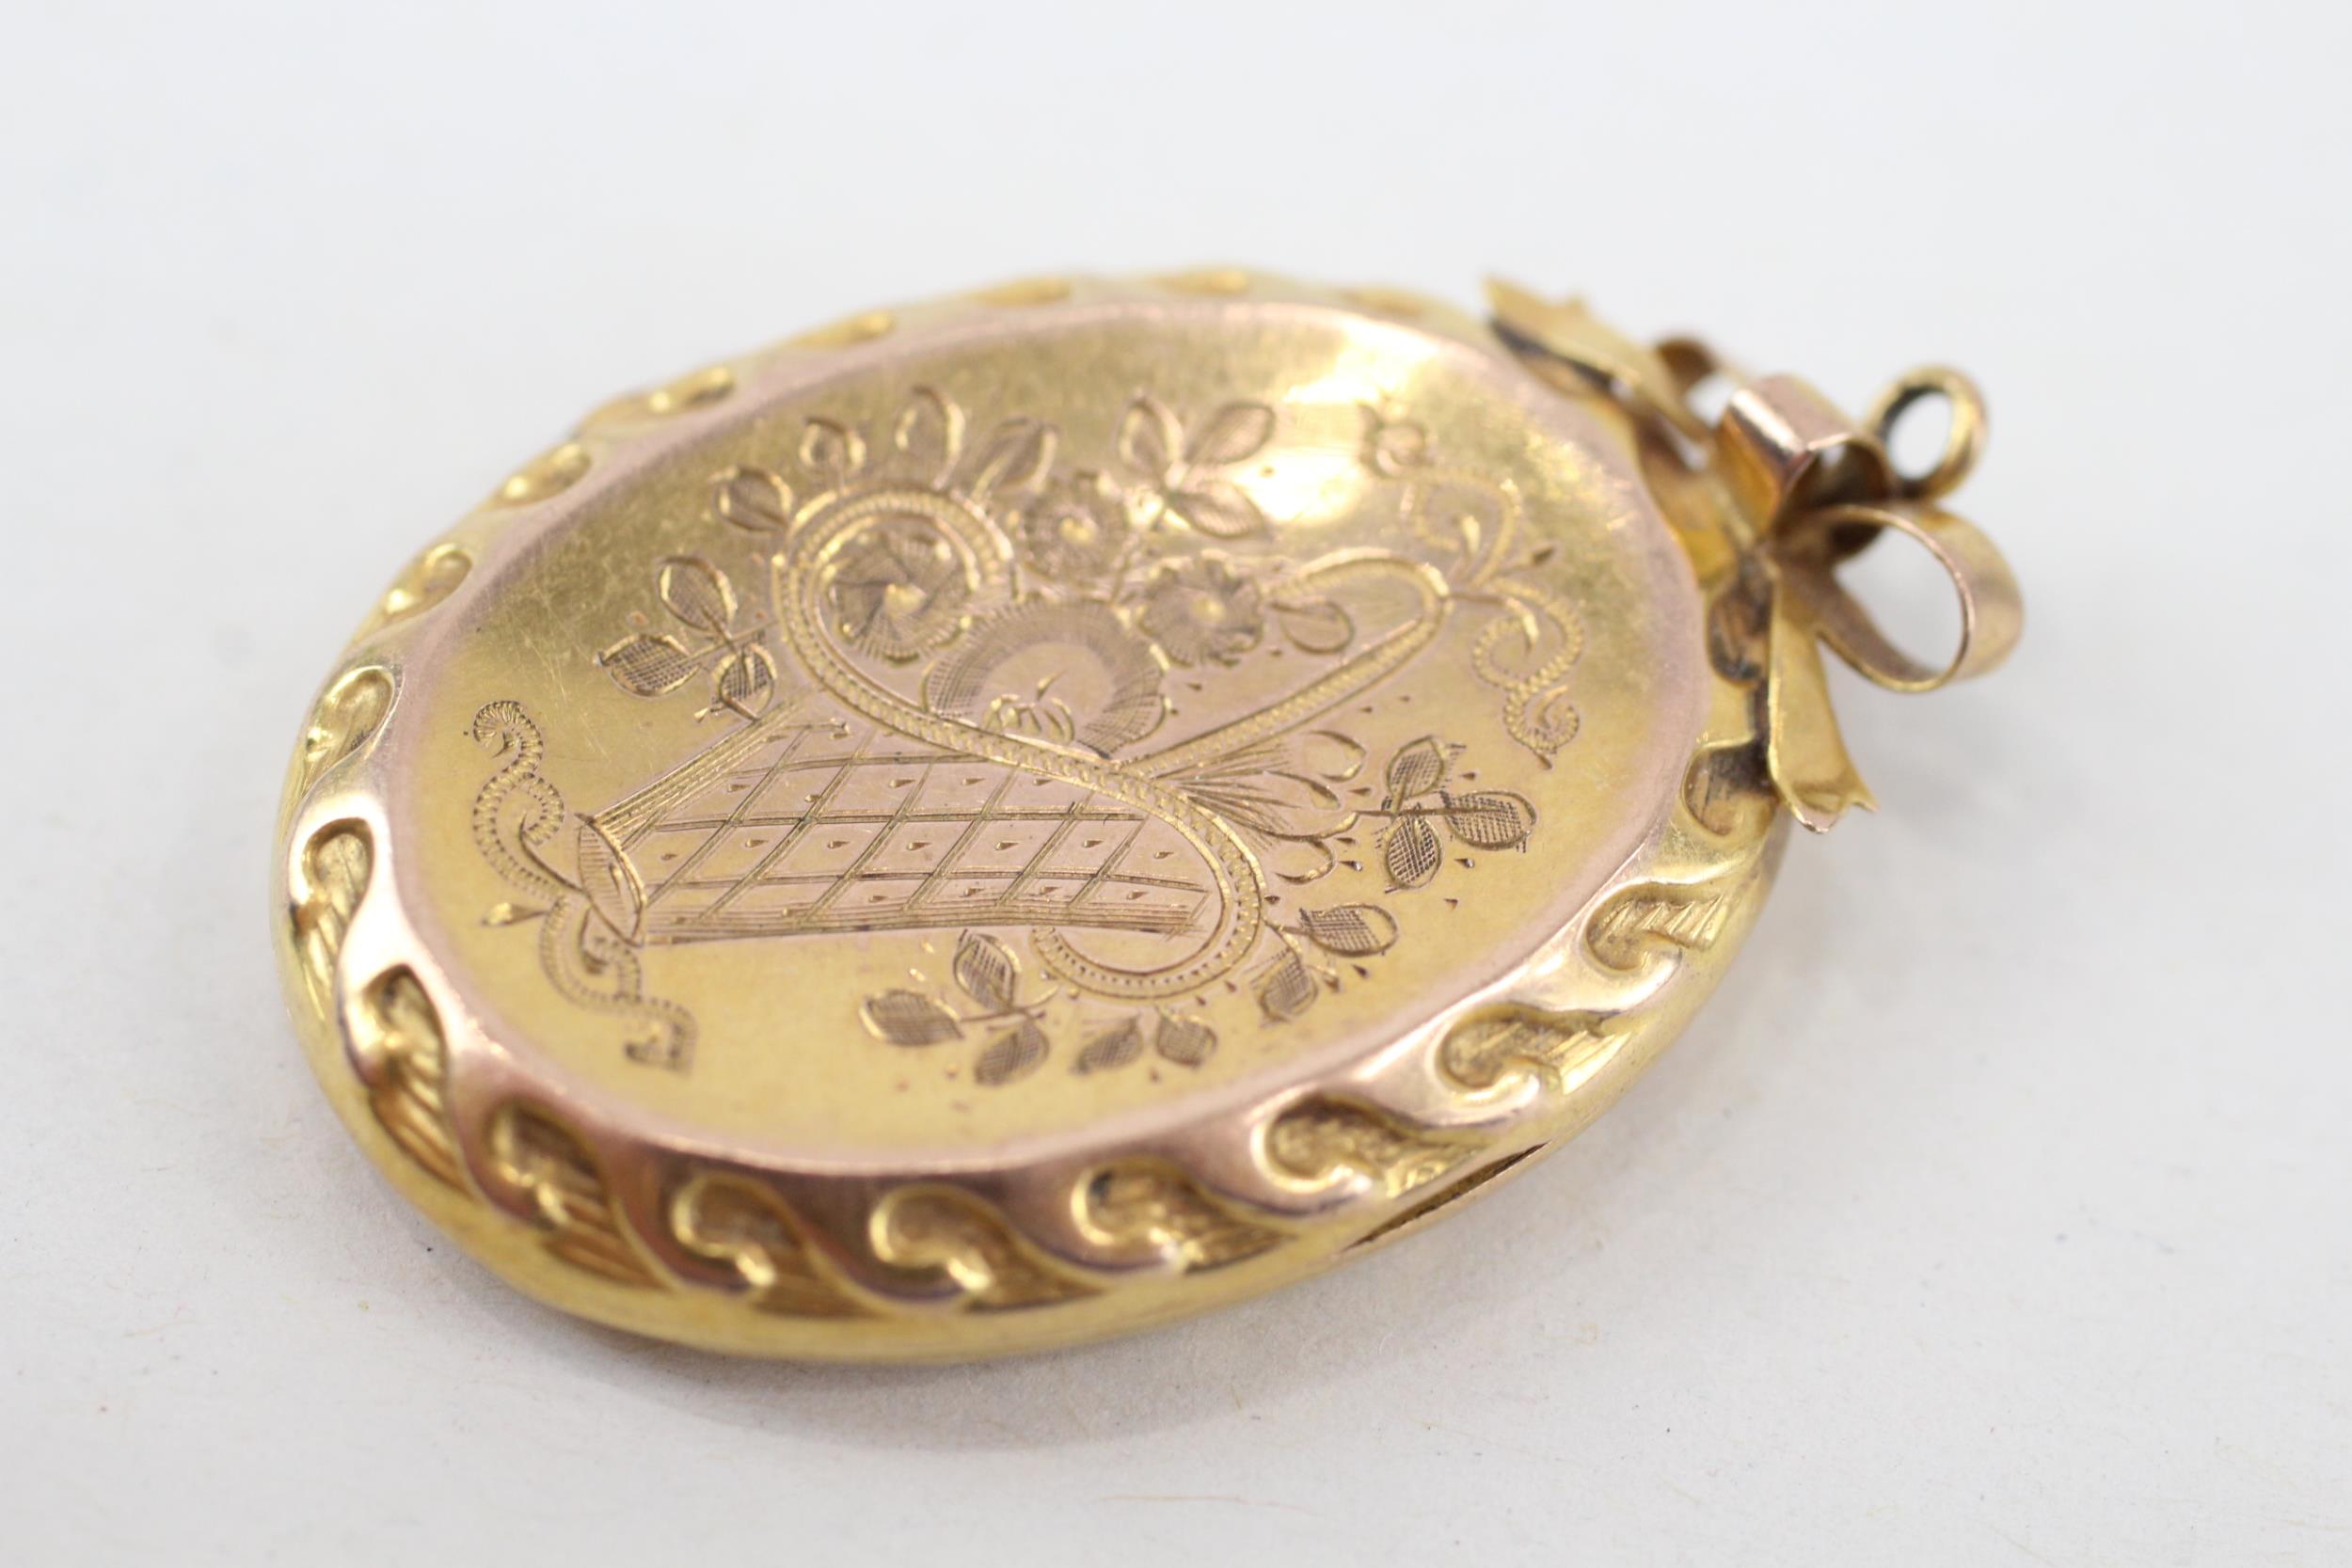 9ct gold back & front Victorian patterned locket (5.7g) - Image 2 of 4